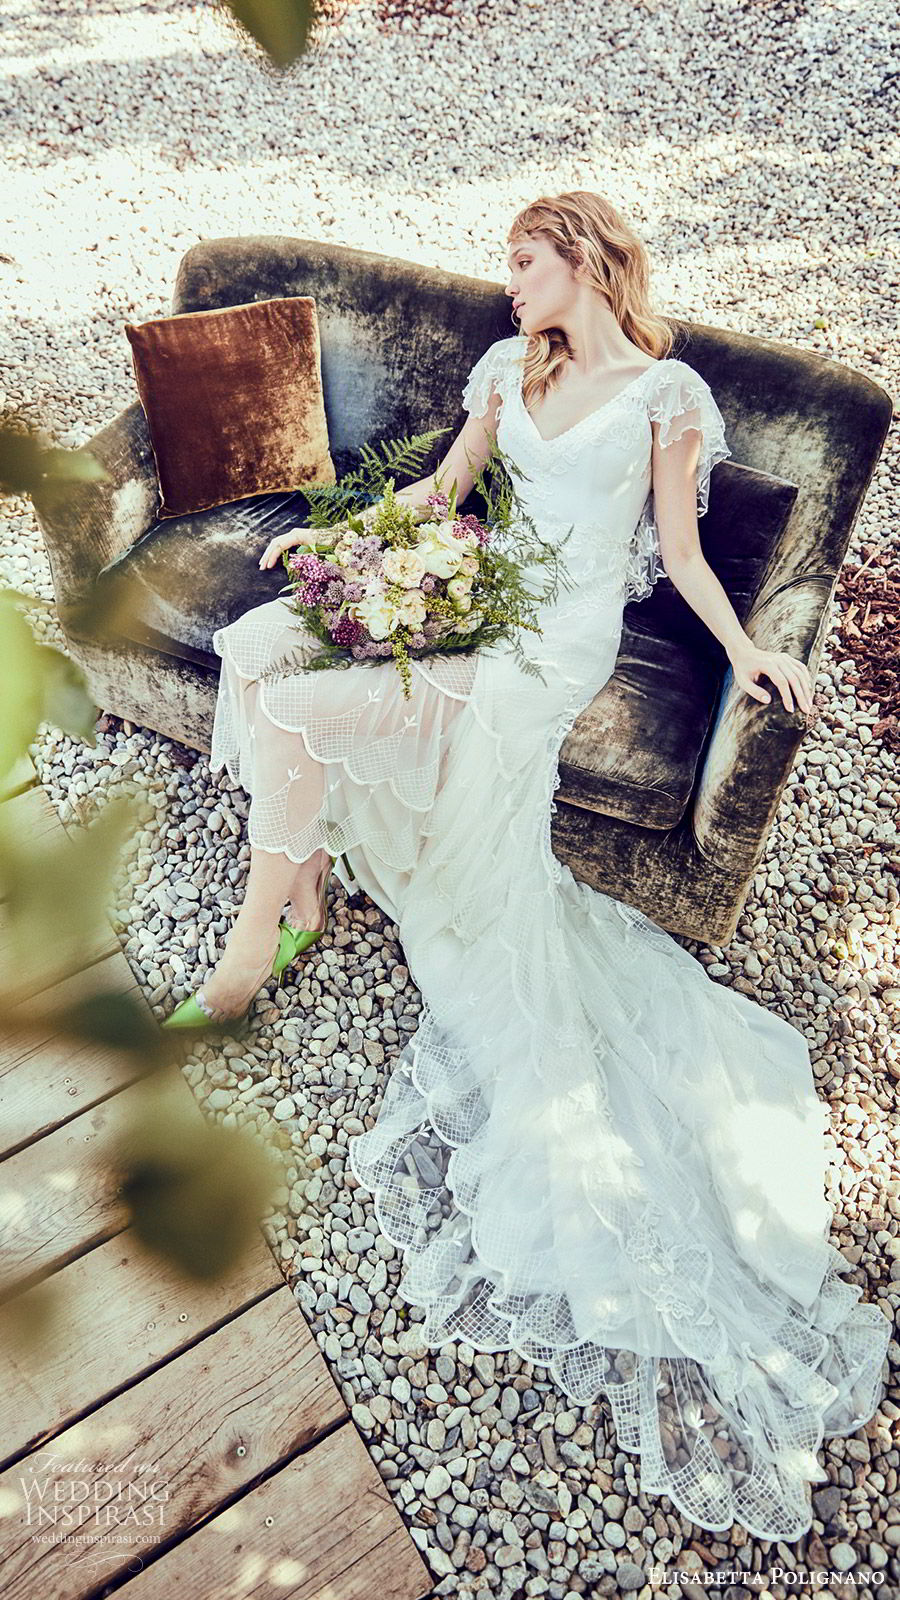 elisabetta polignano 2019 bridal sflutter sleeves v neck high low lace a line wedding dress (6) romantic vintage boho chic mv